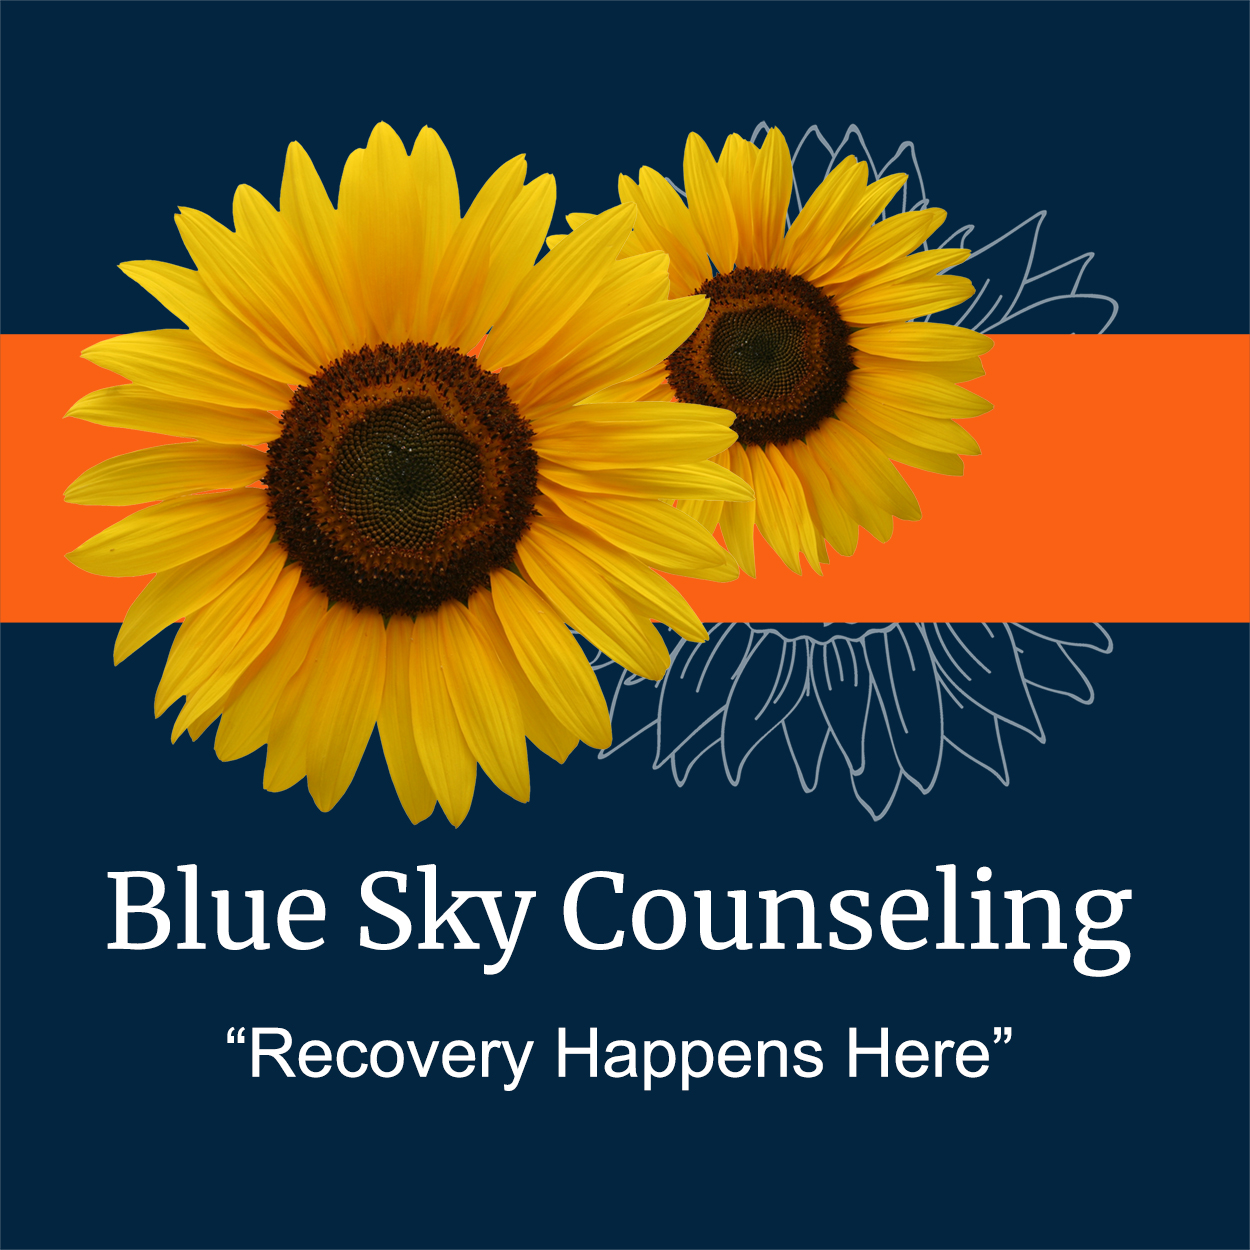 Blue Sky Counseling logo